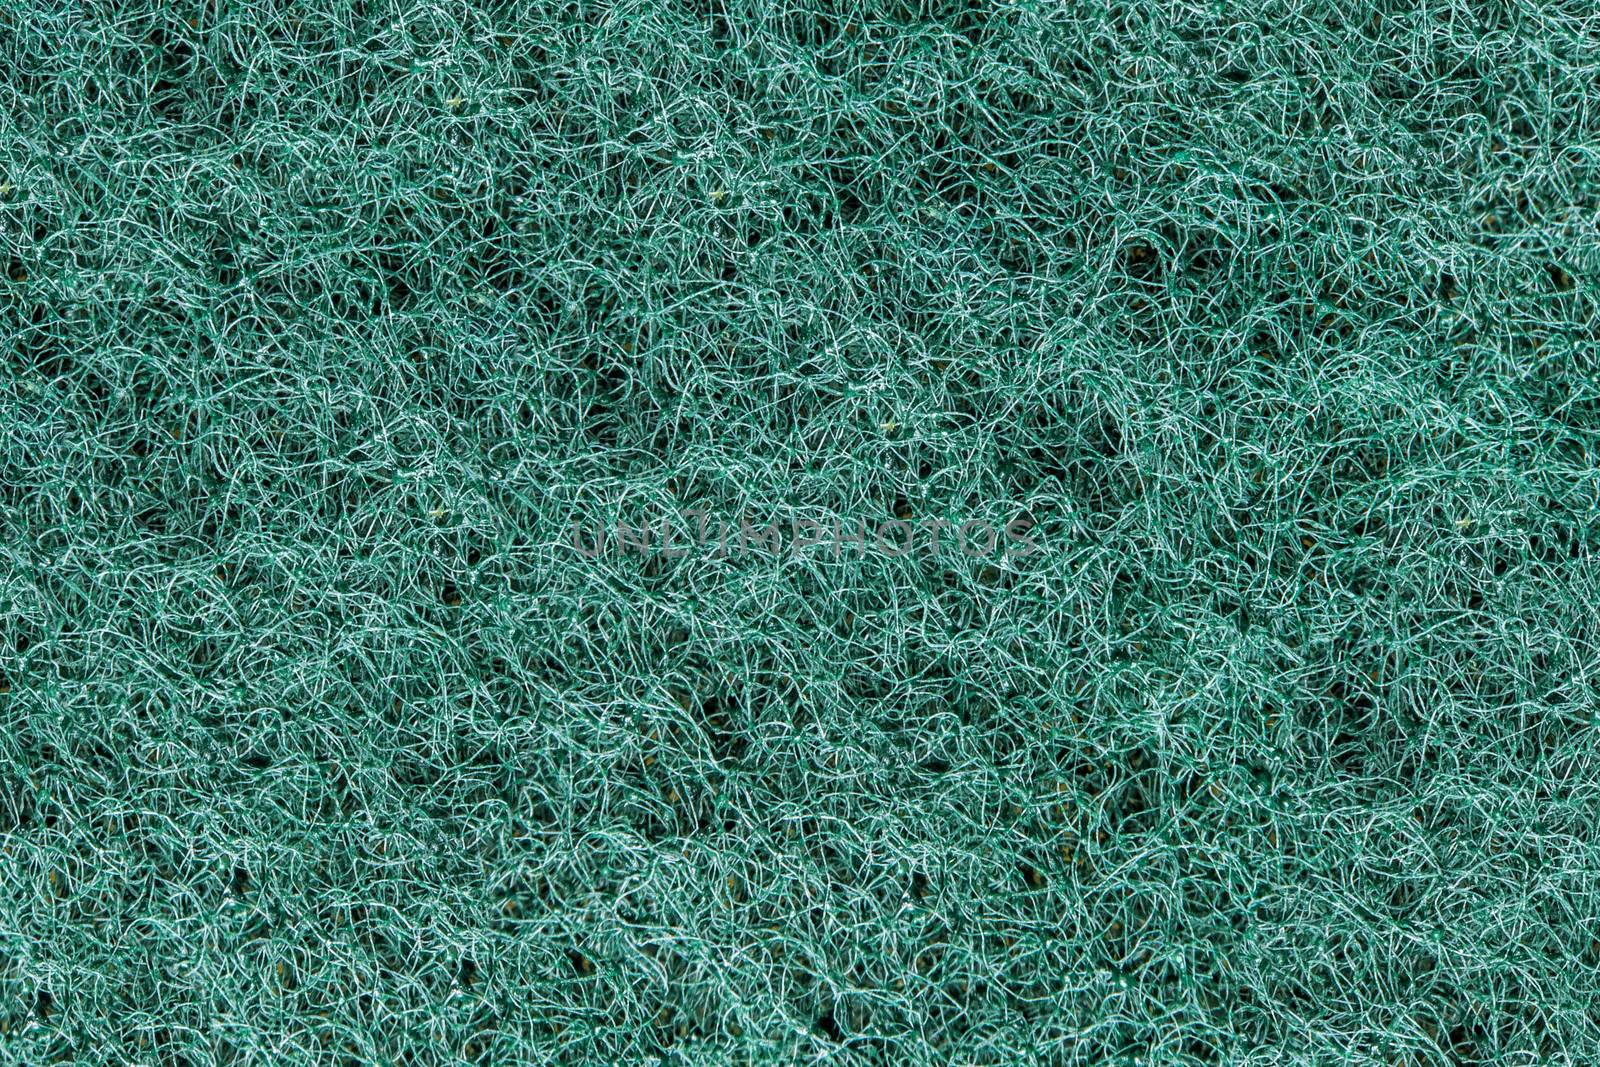 Washing sponge texture by dynamicfoto